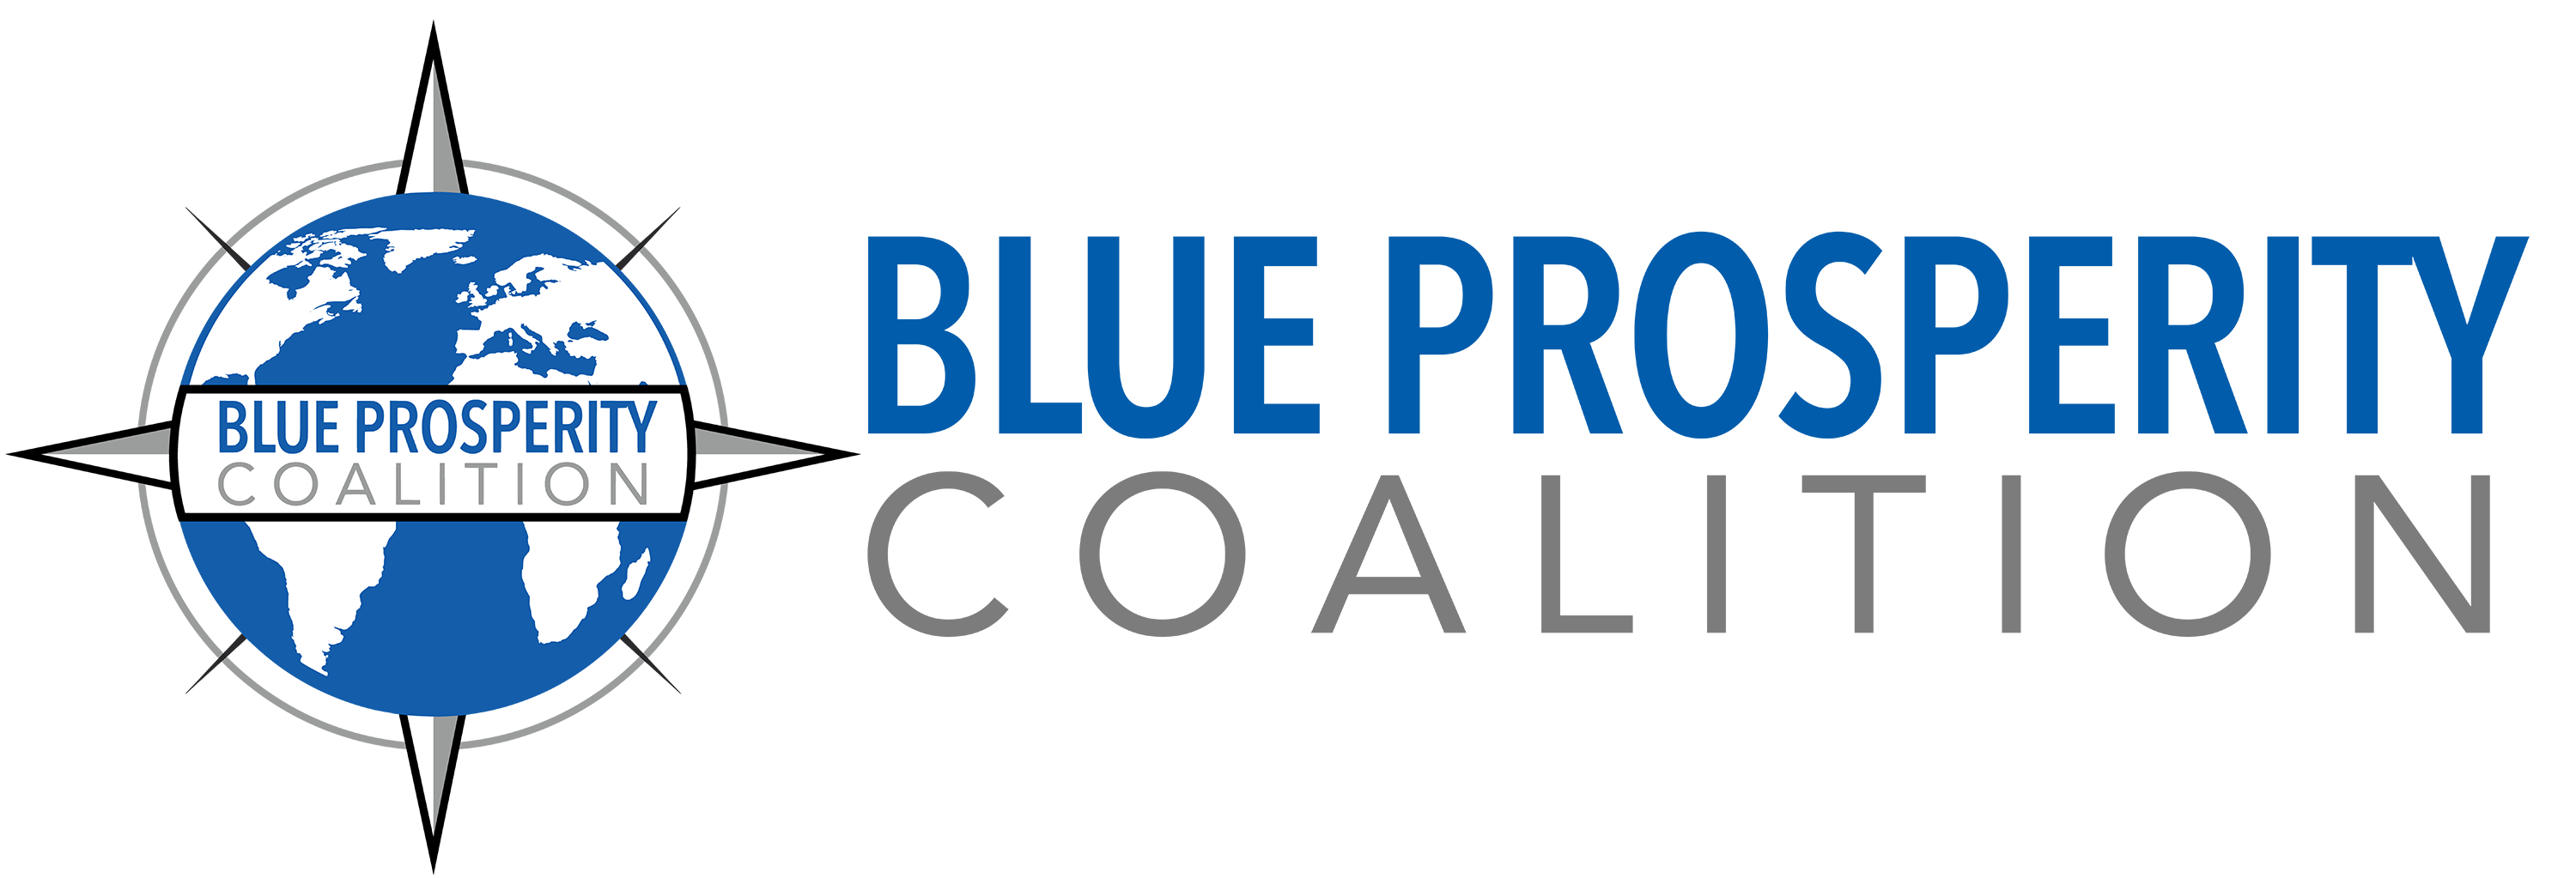 blue prosperity coalition logo